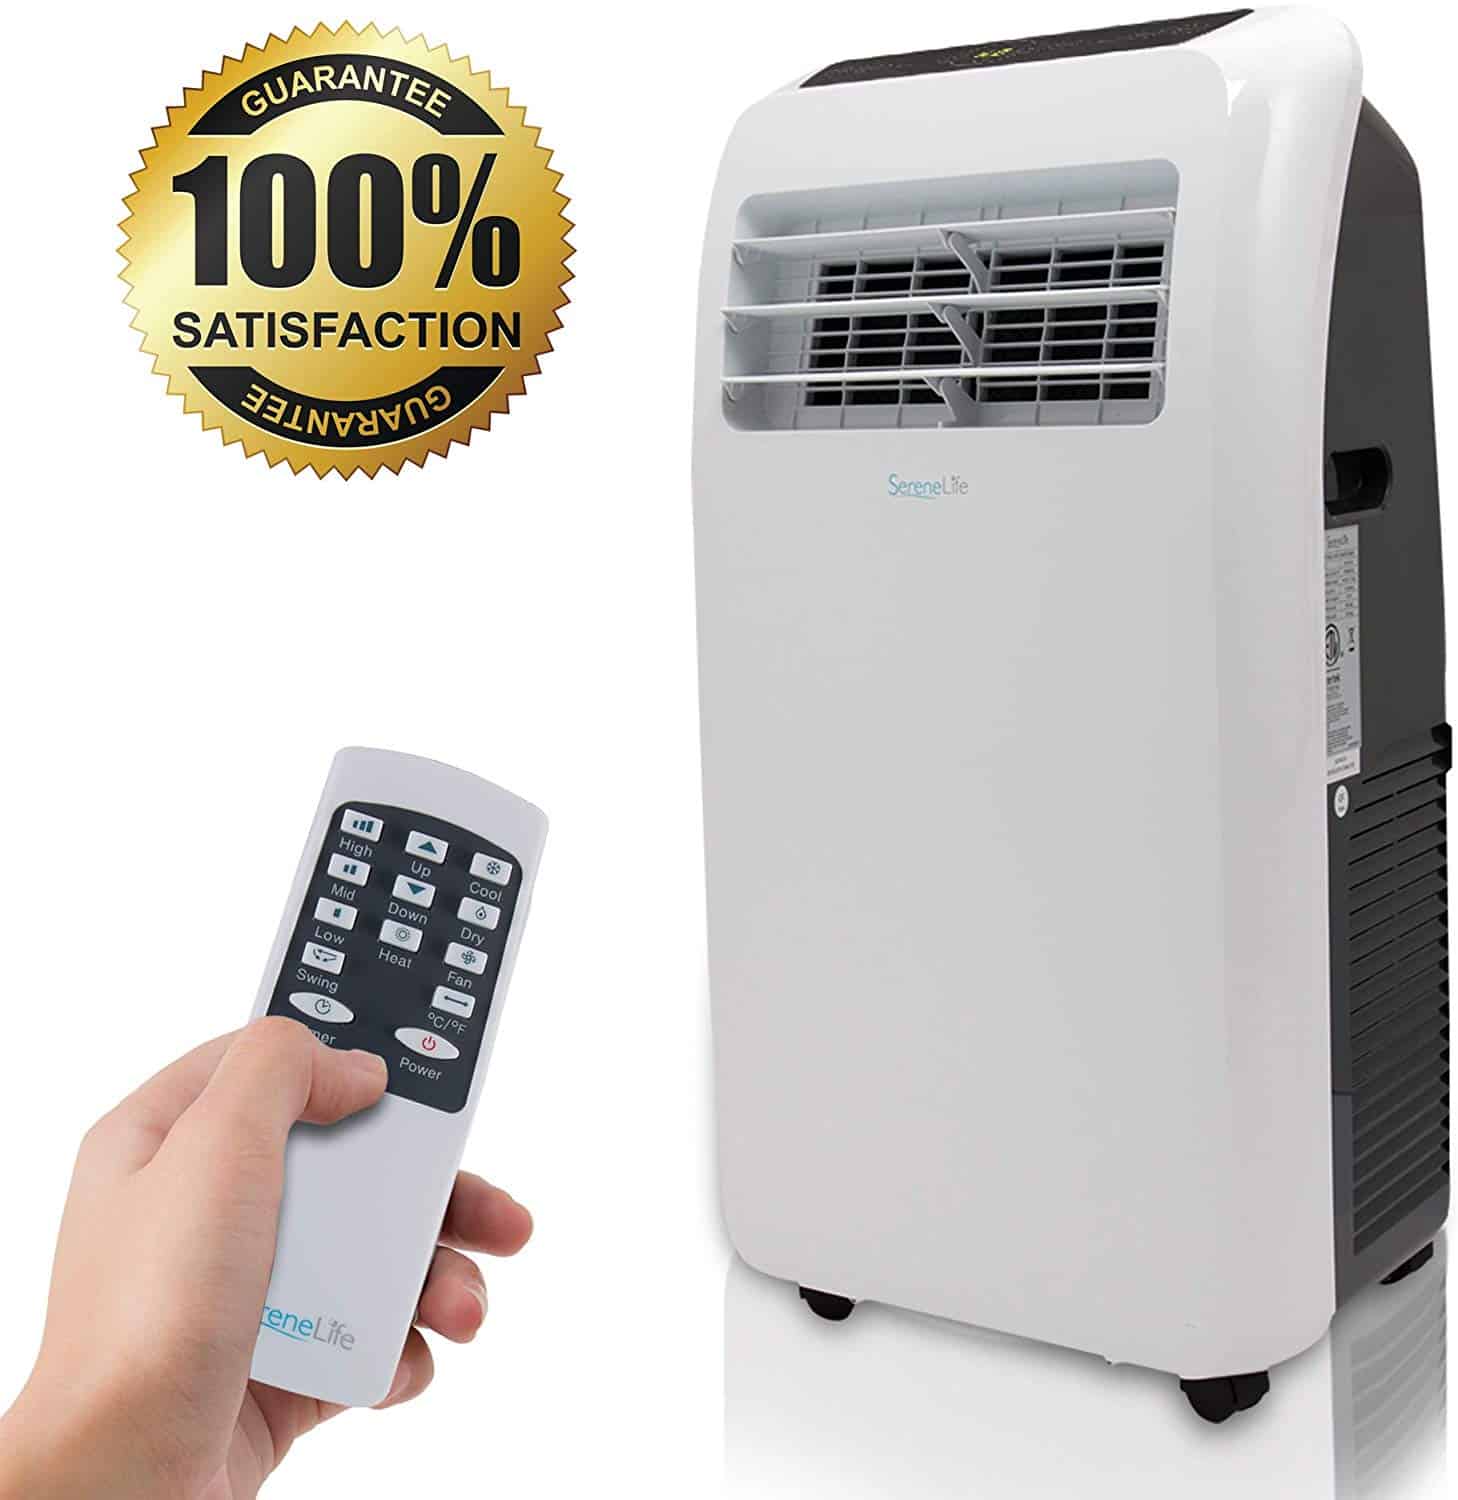 SereneLife 10,000 BTU Portable Air Conditioner Review IndoorBreathing